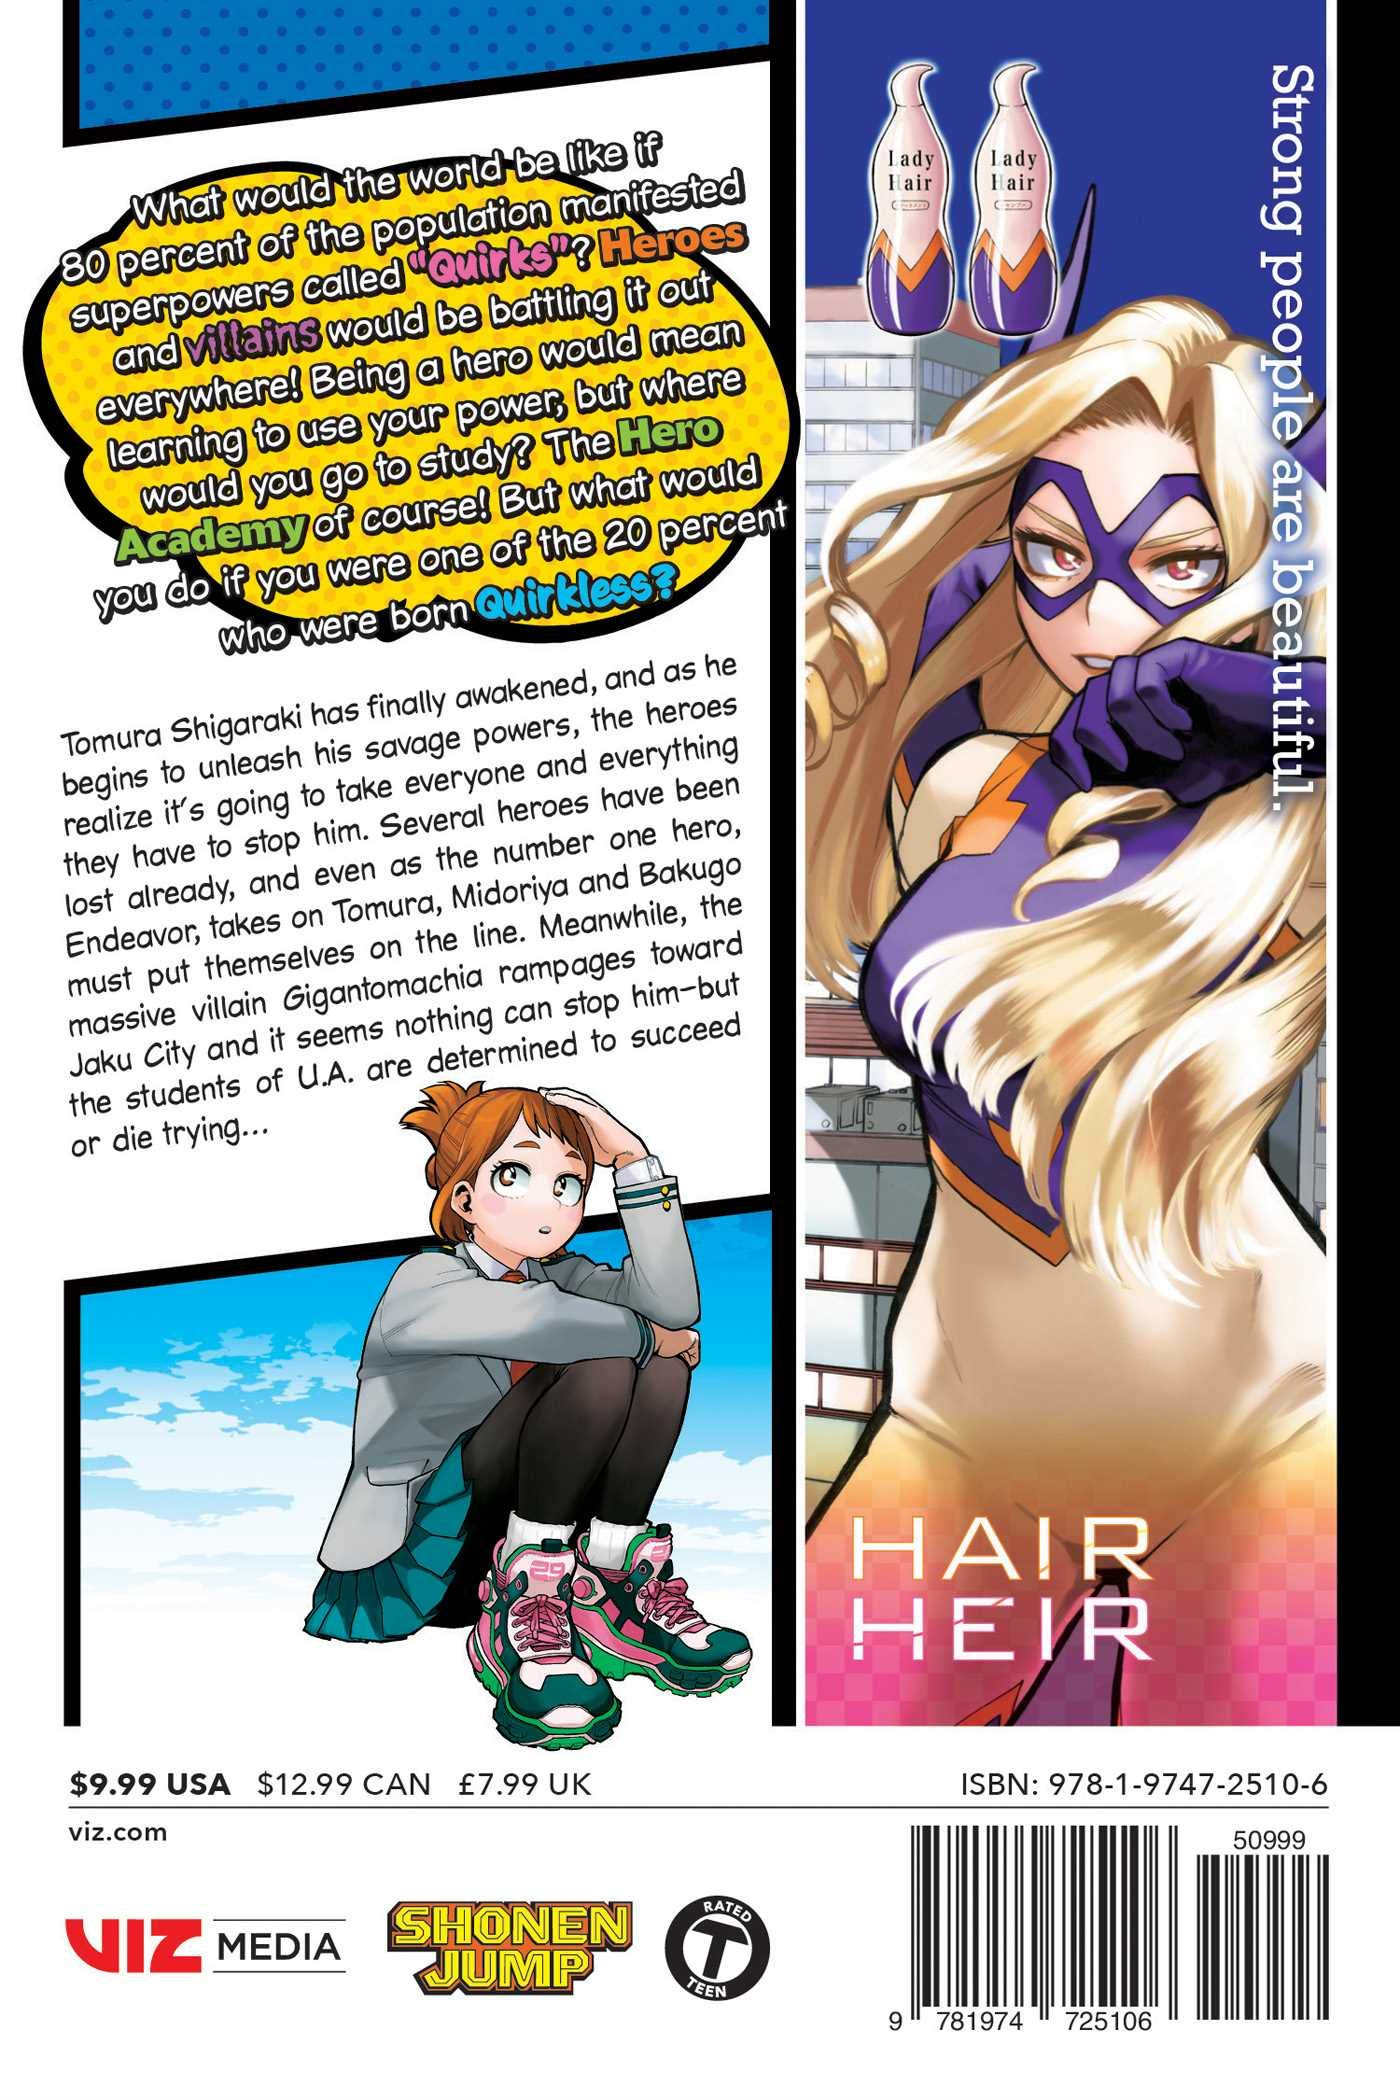 VIZ  Read a Free Preview of My Hero Academia, Vol. 29